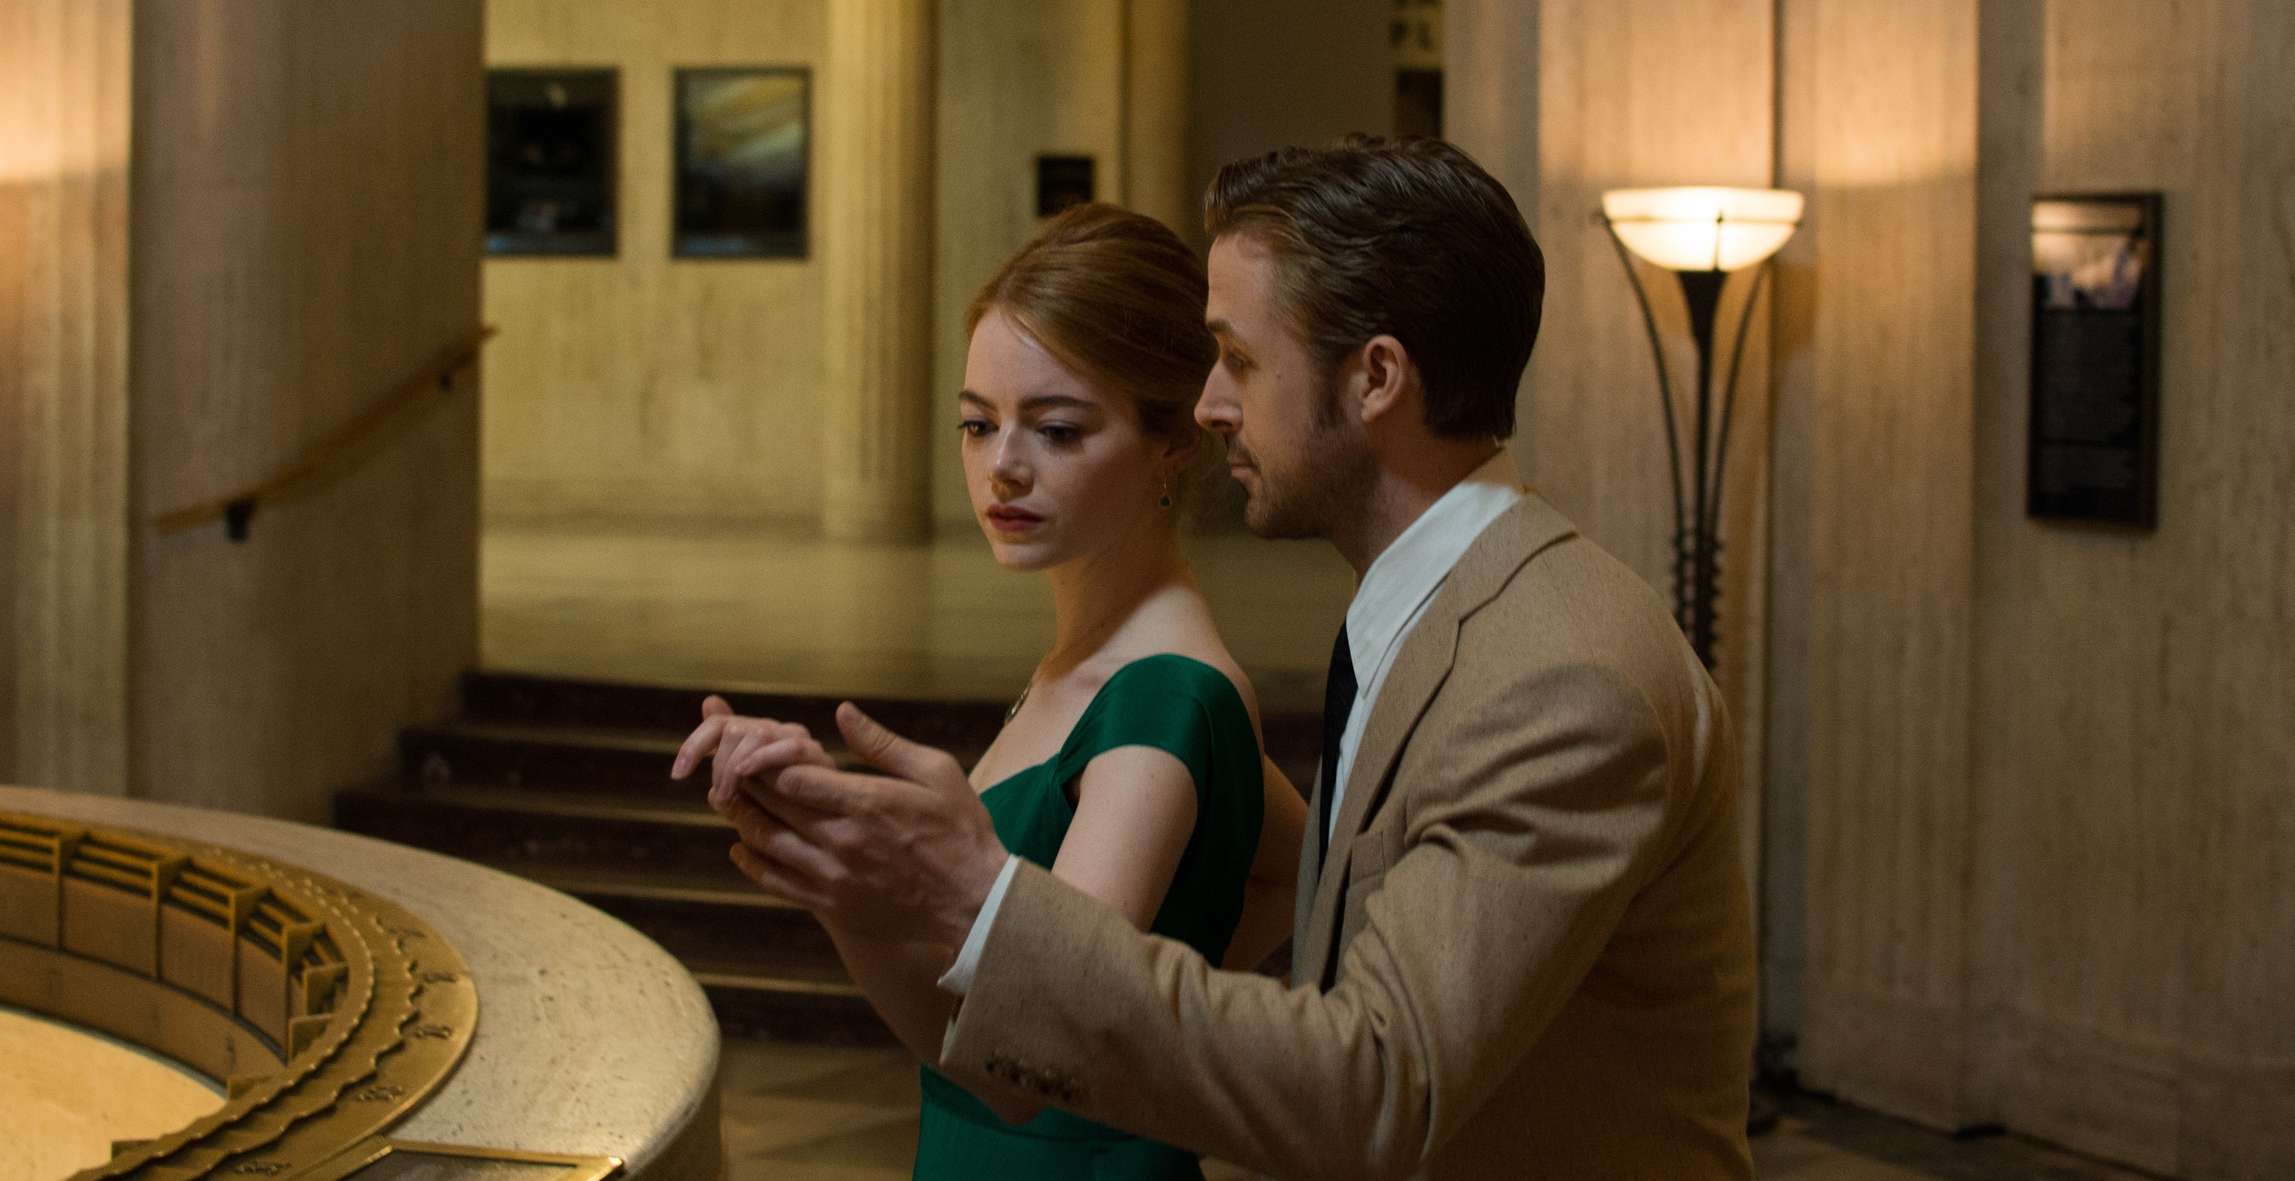 Emma Stone and Ryan Gosling shine in La La Land (category IIA), directed by Damien Chazelle.